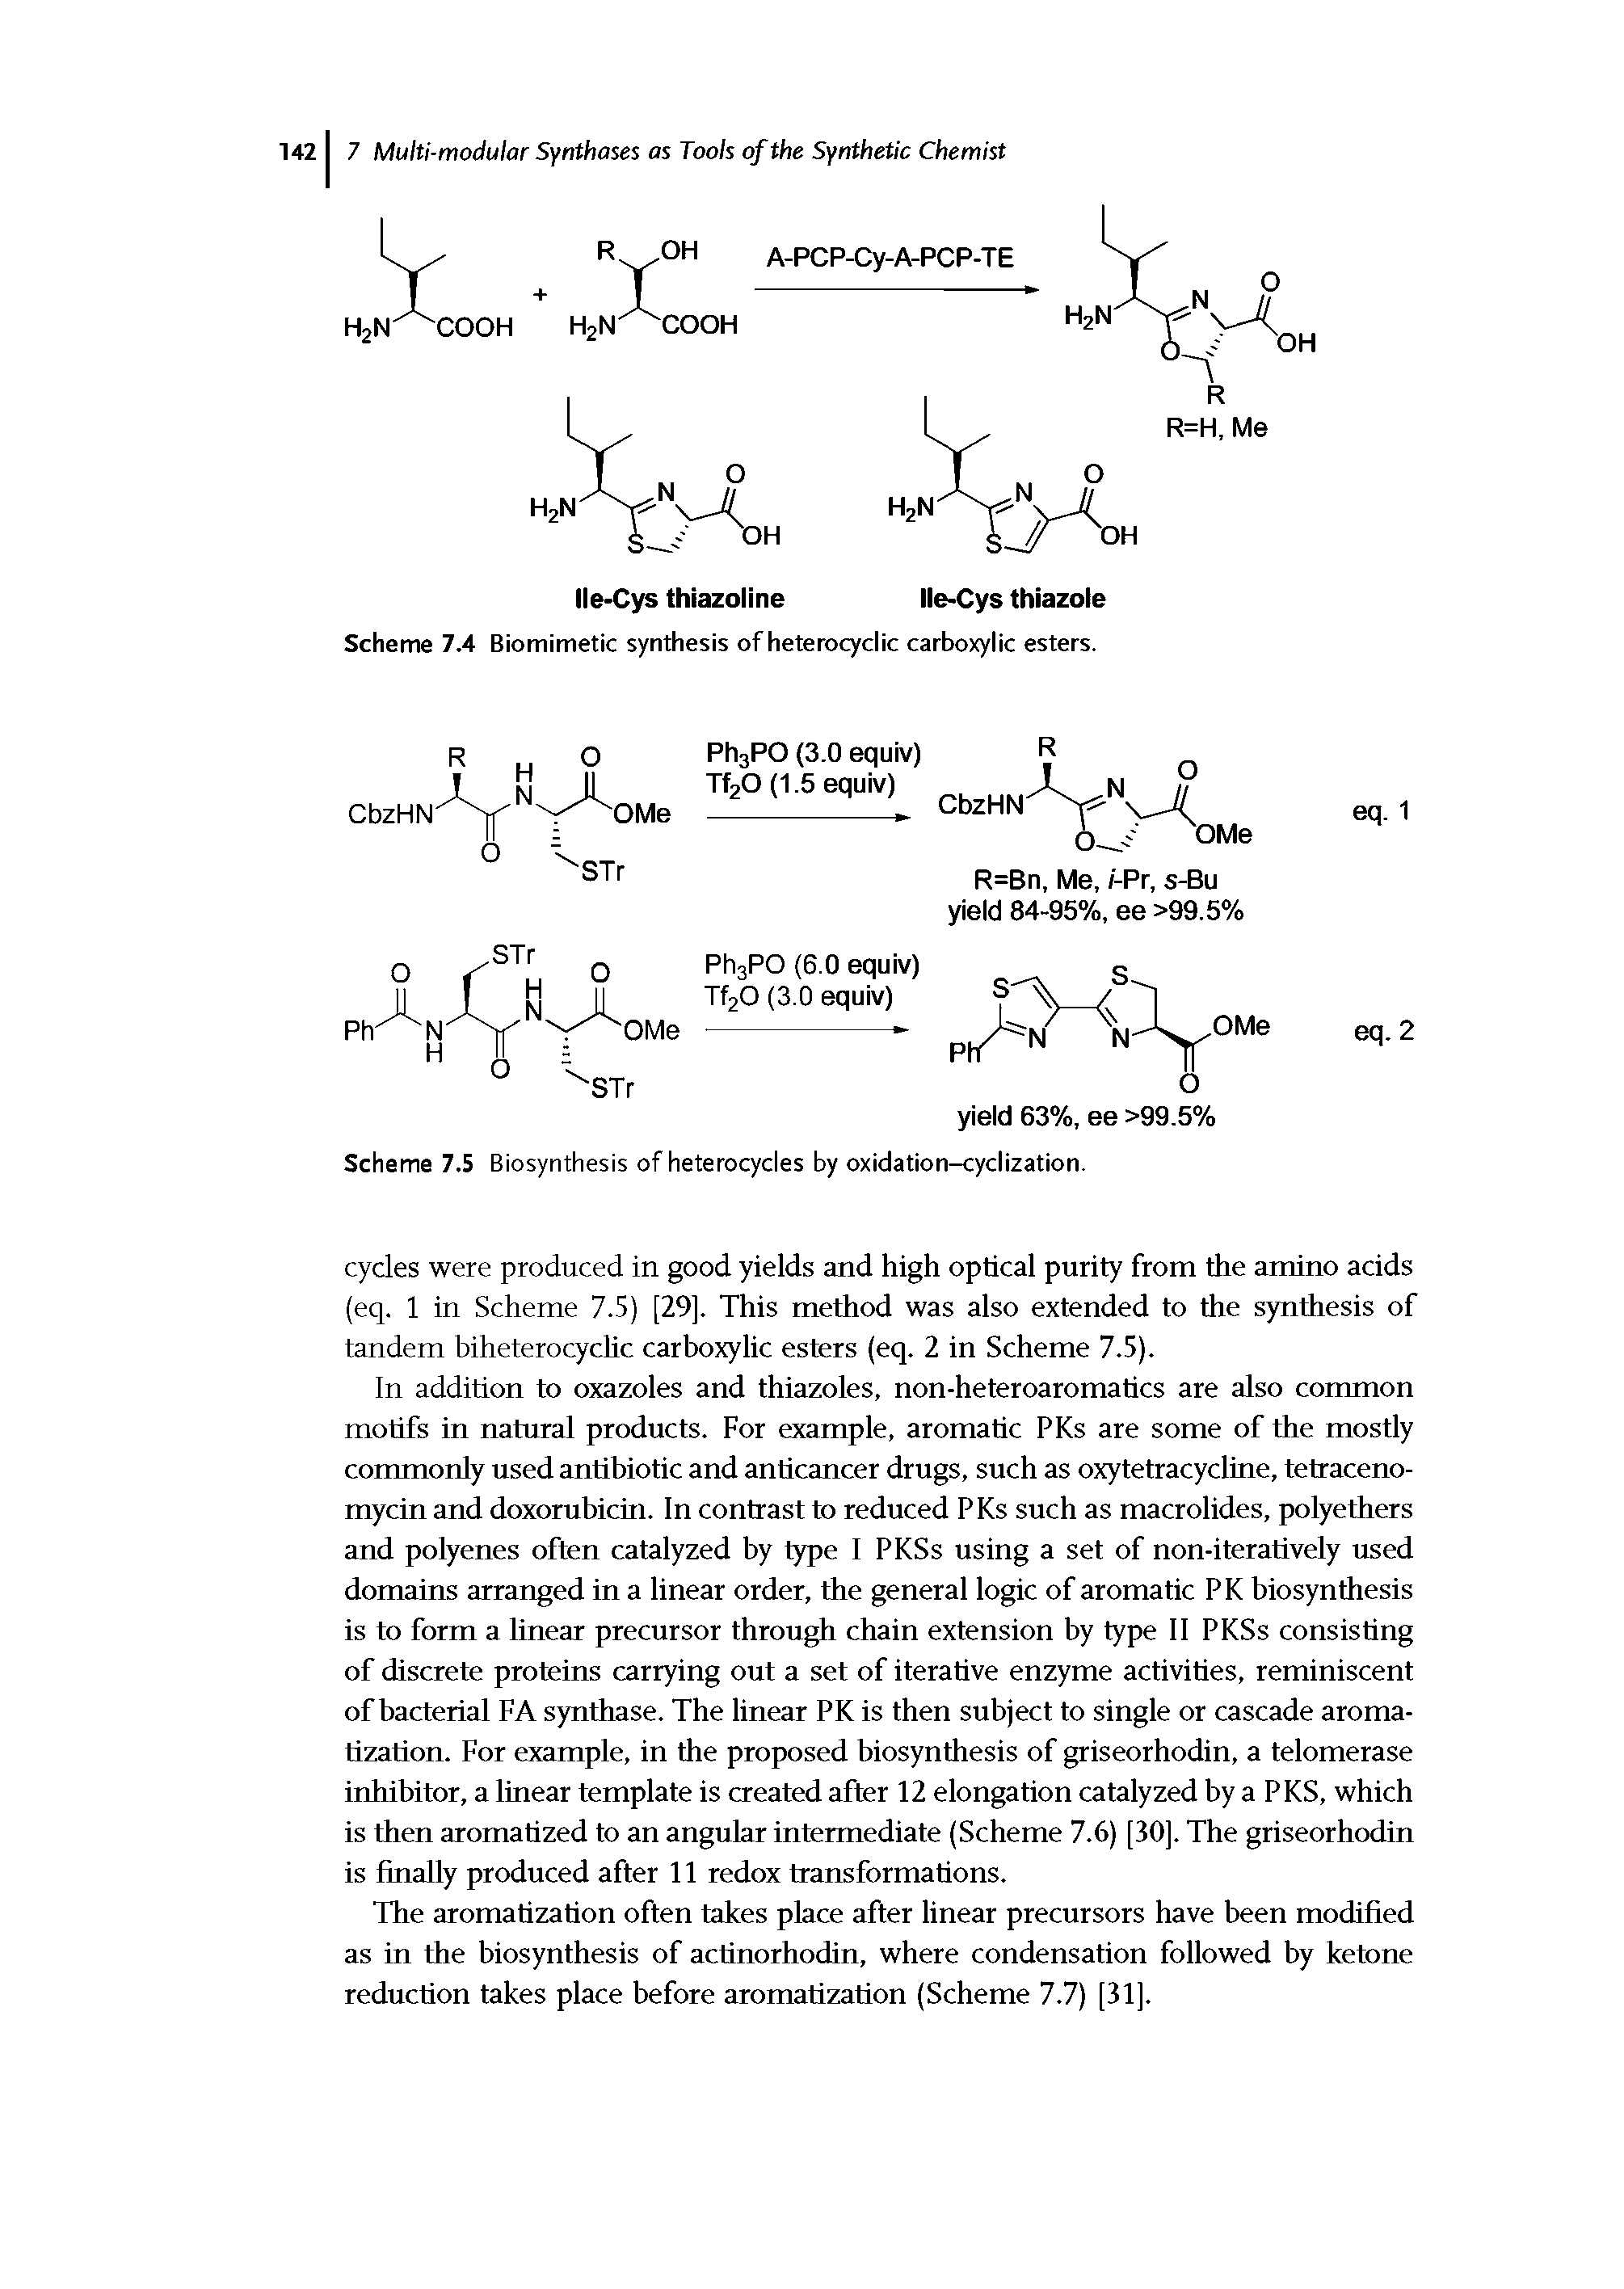 Scheme 7.4 Biomimetic synthesis of heterocyclic carboxylic esters.